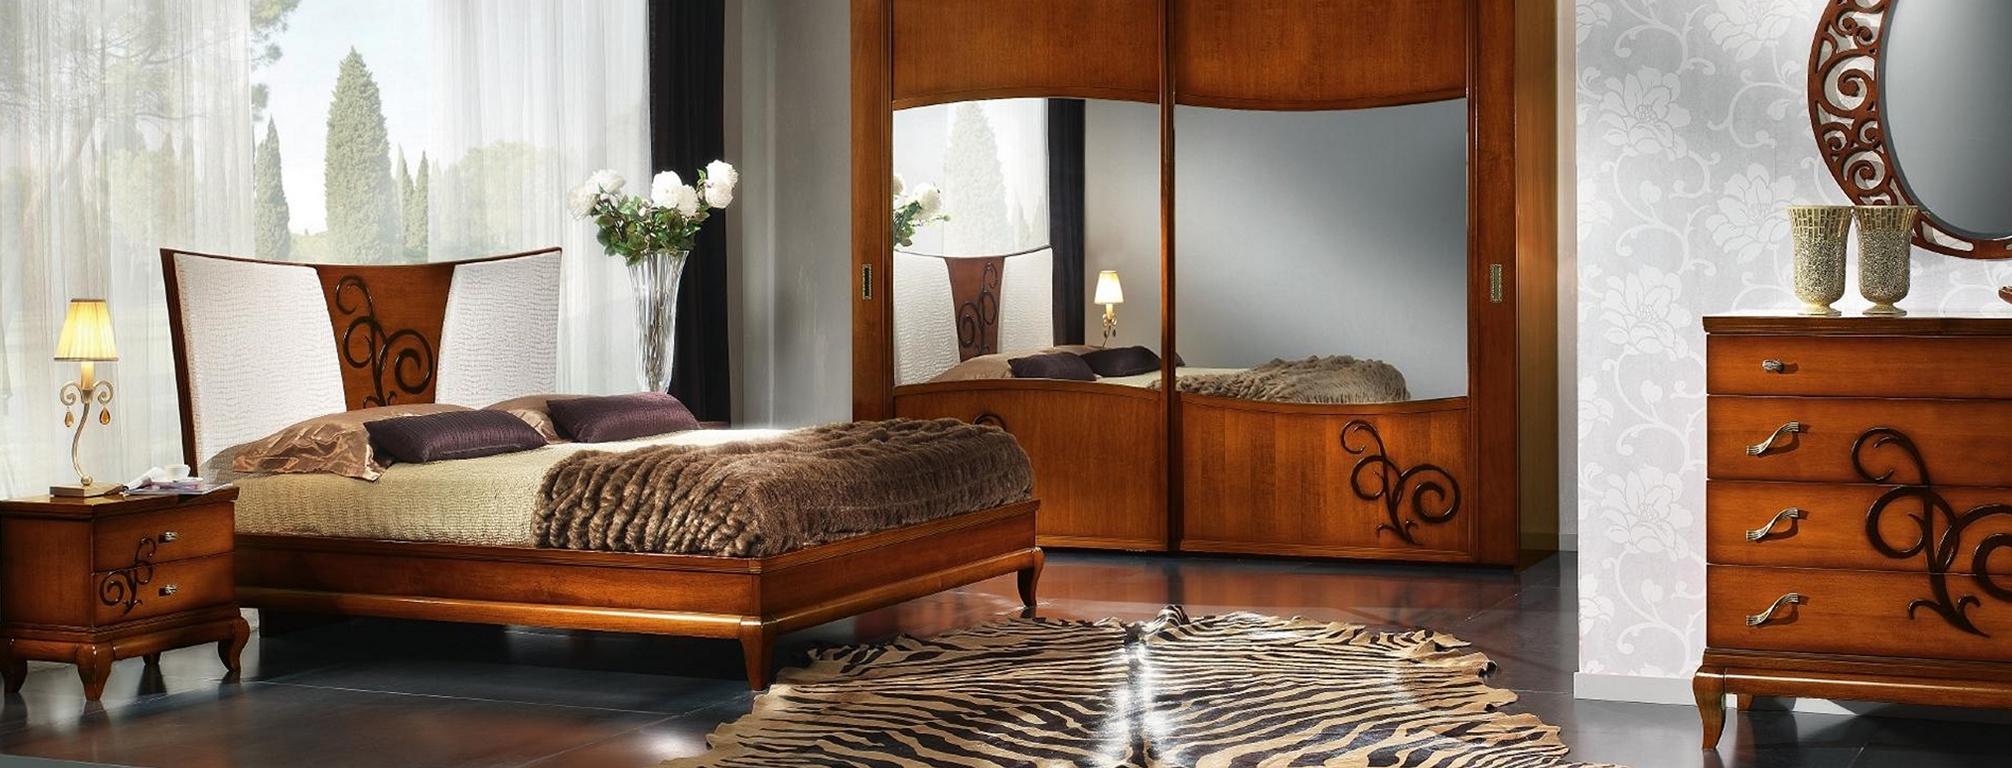 Bett Doppelbetten Modernes Bettgestell Betten Bettrahmen Holz Hotel Design